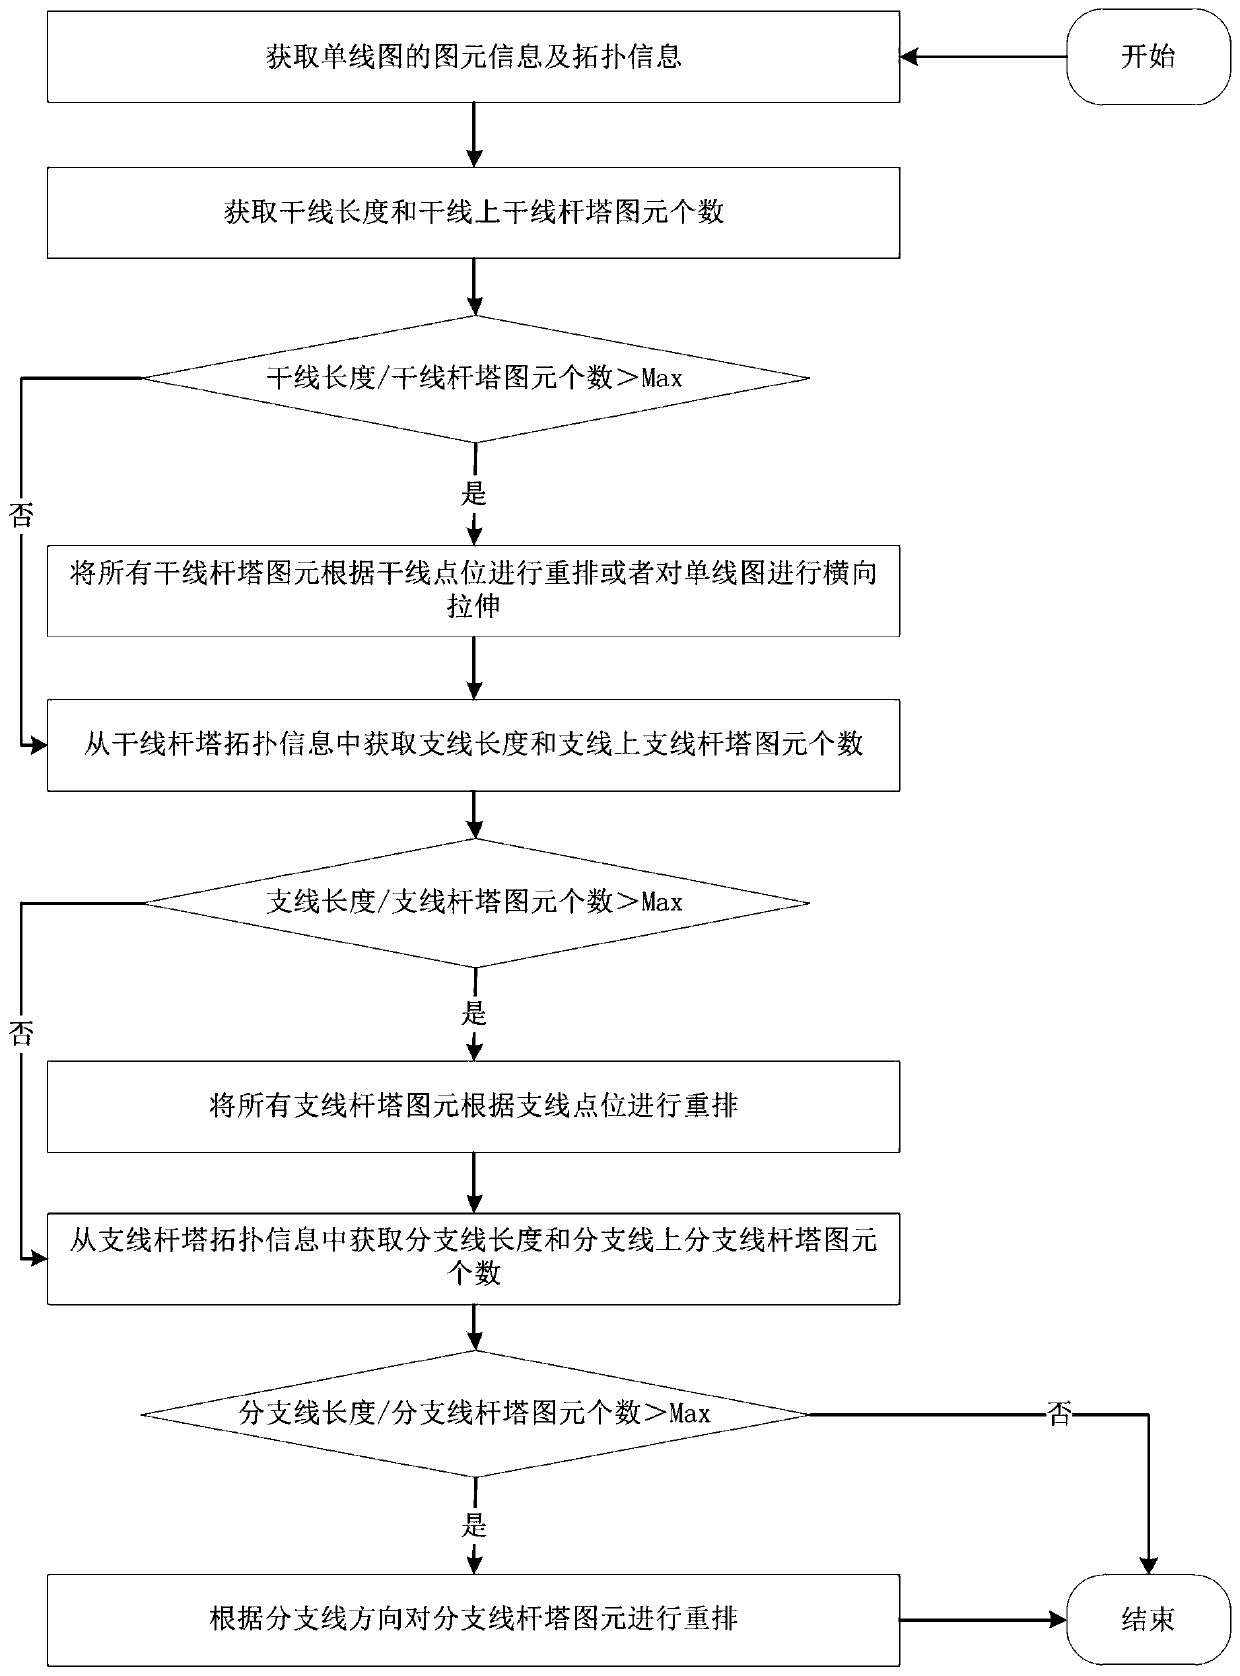 Optimization method for single line diagram of distribution network system